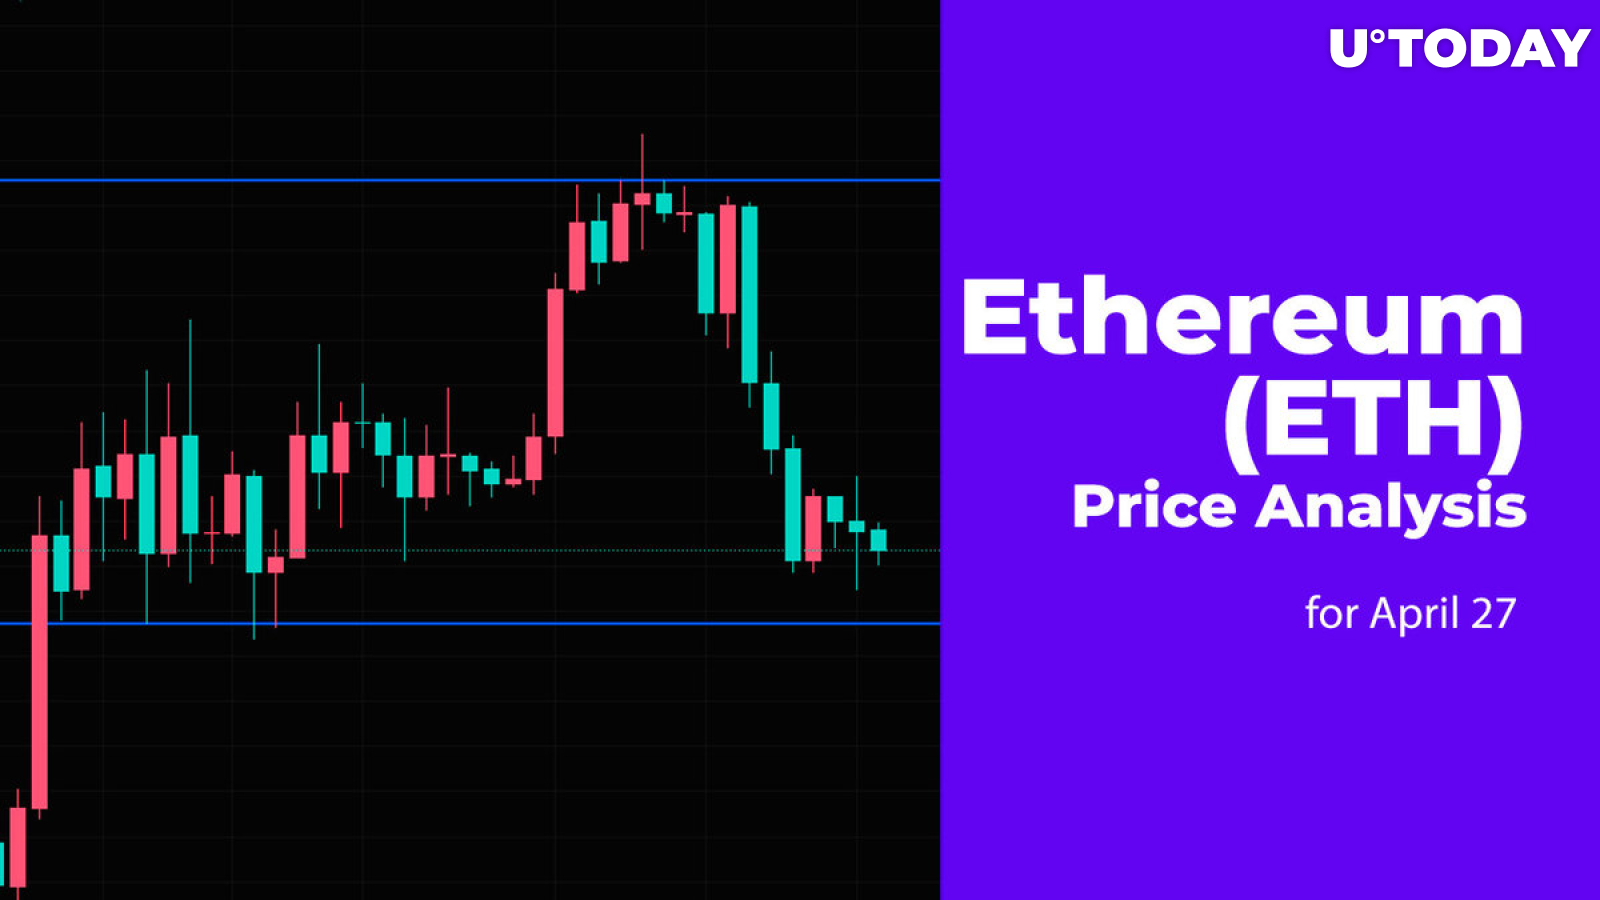 Ethereum (ETH) Price Analysis for April 27